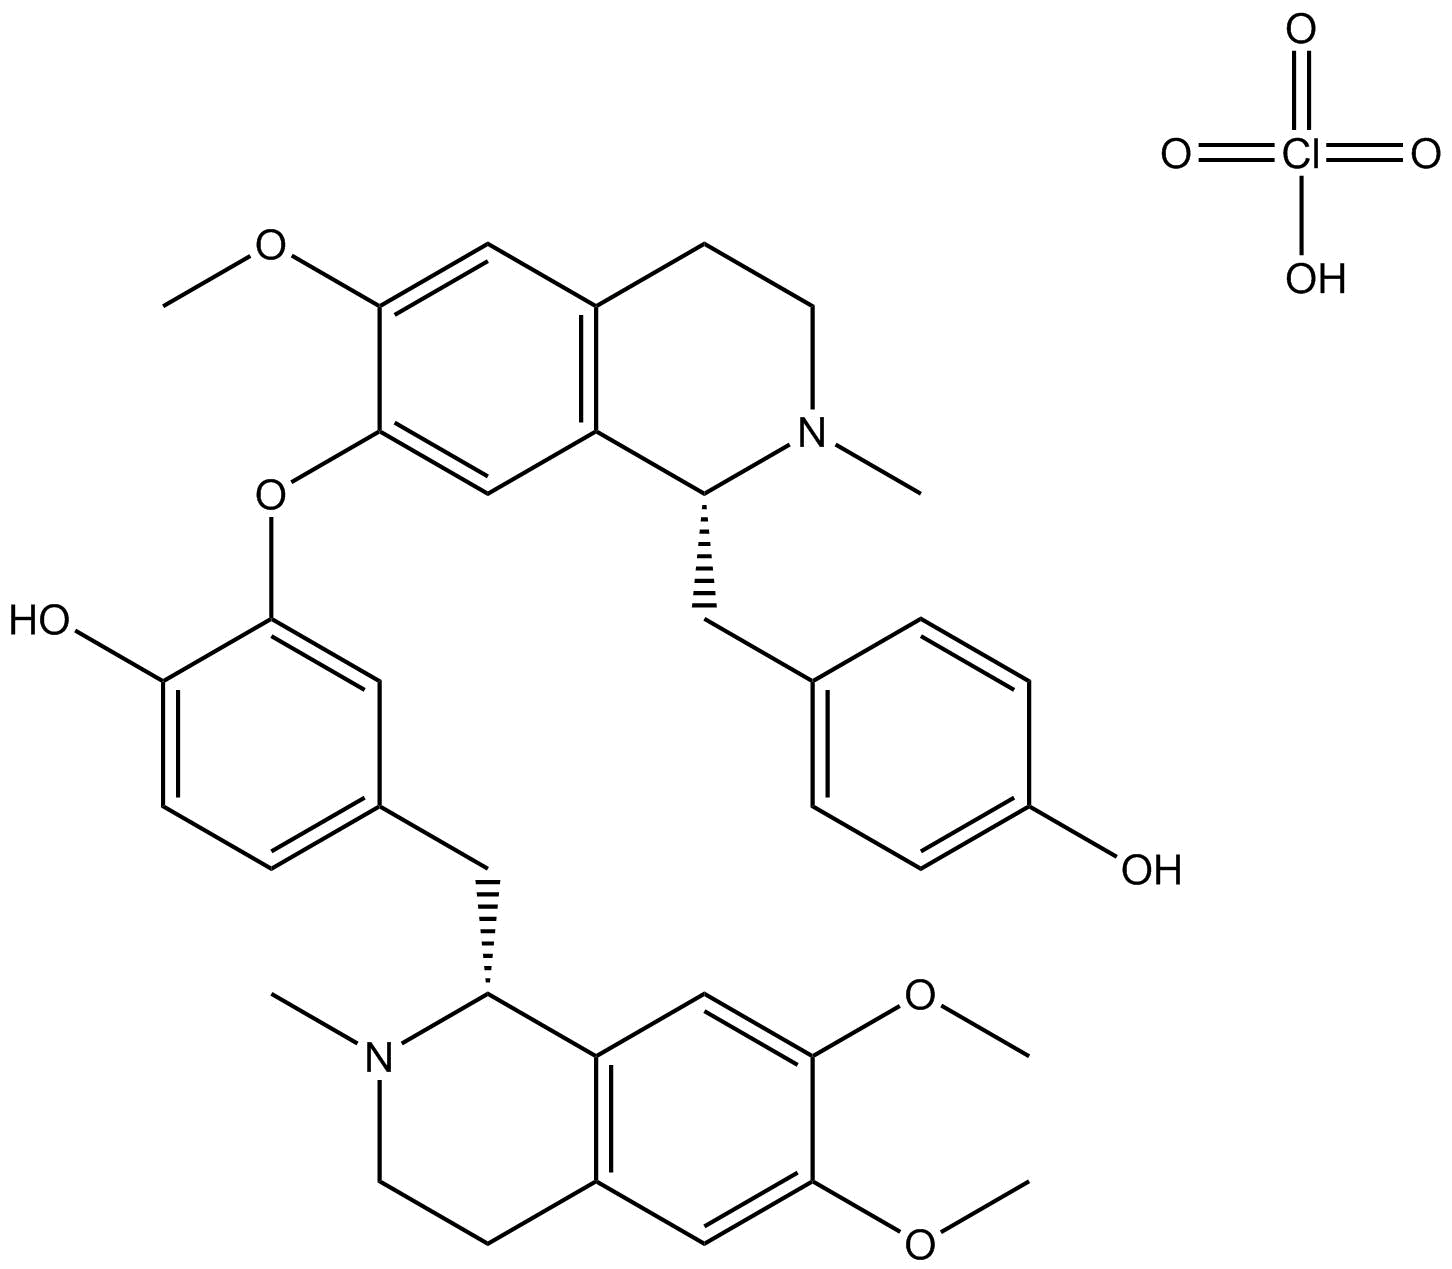 Liensinine Perchlorate